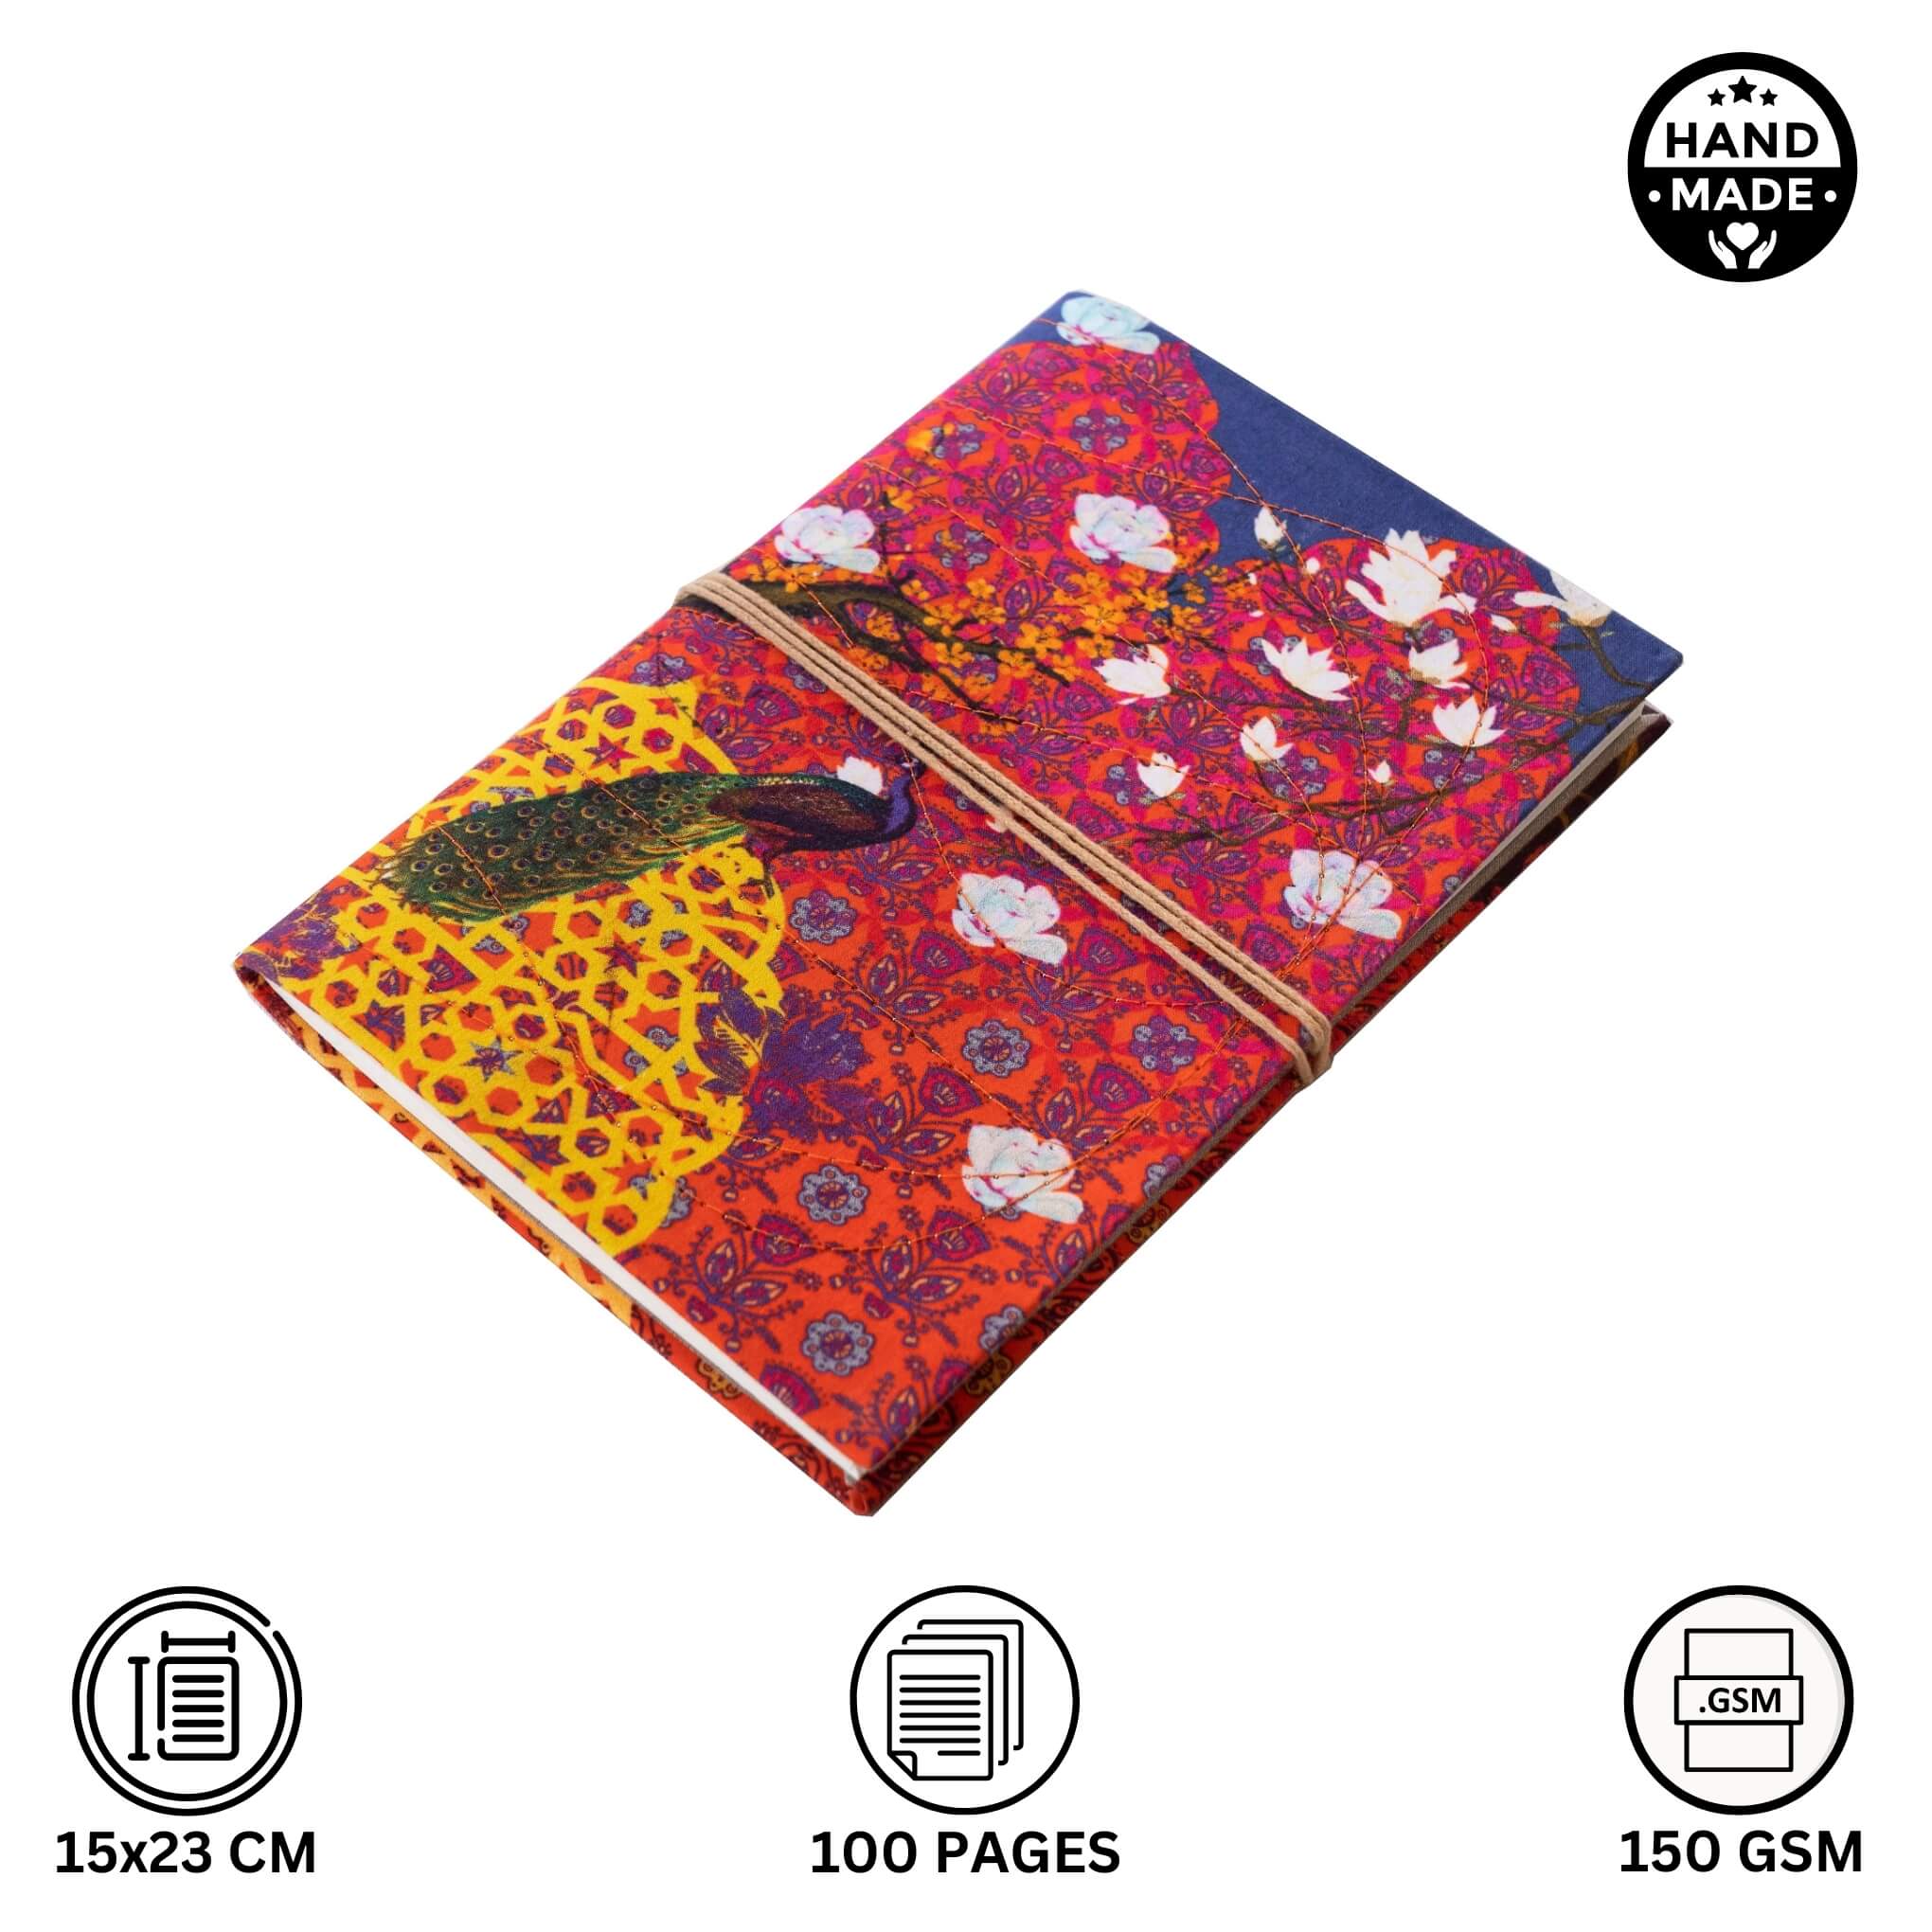 Handmade Notebook in India